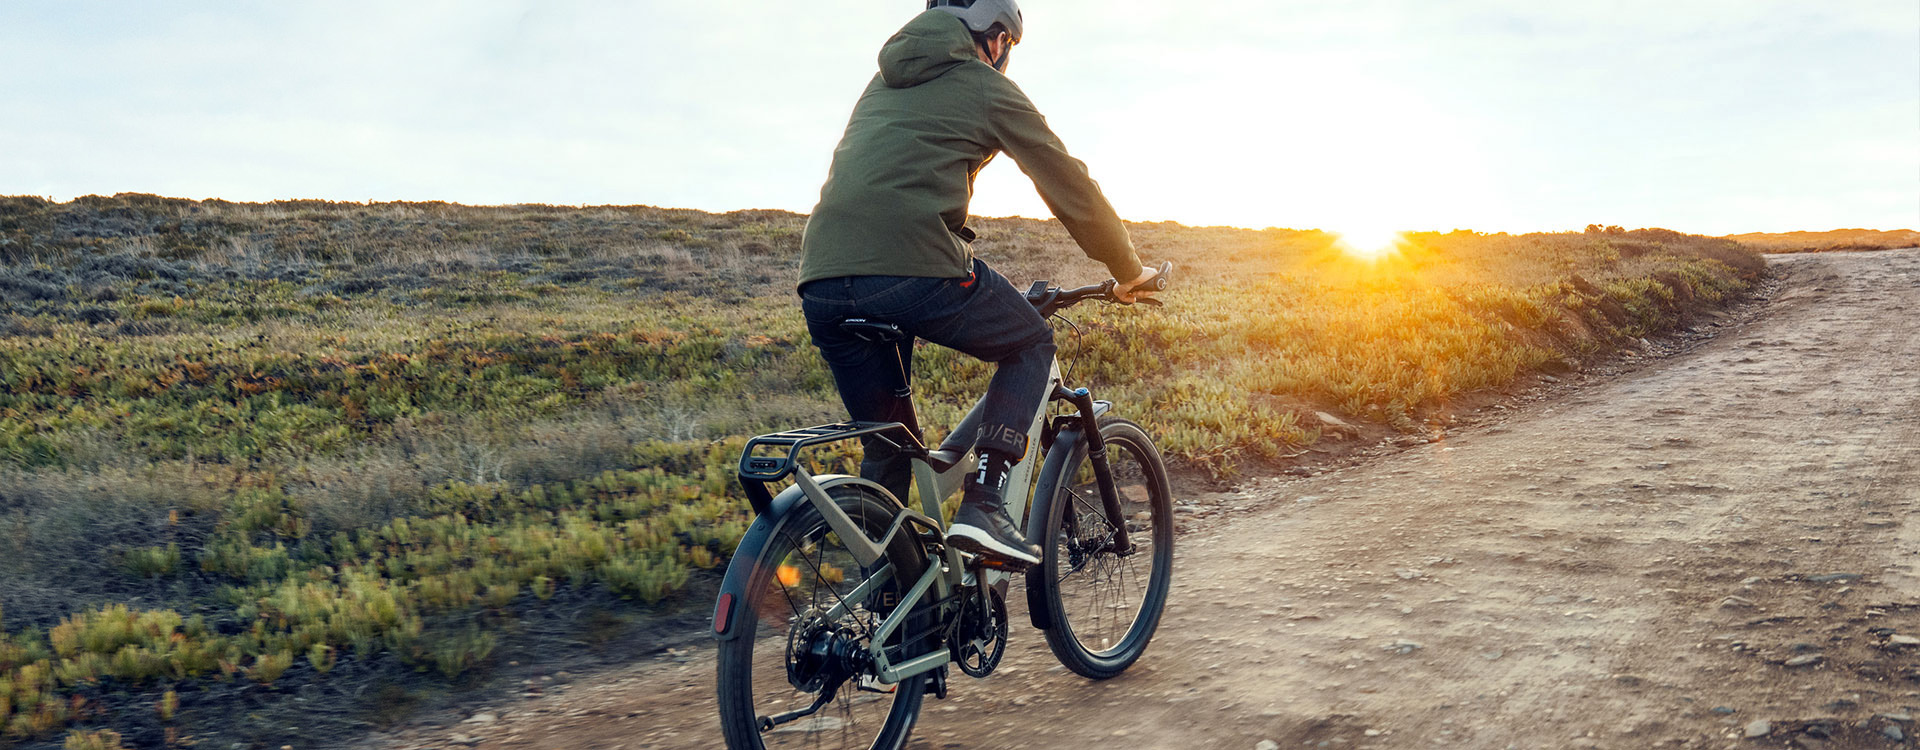 Riese & Müller Superdelite - Premium e-bike - Elan Bikes - Ontspannen fietsen in de natuur.